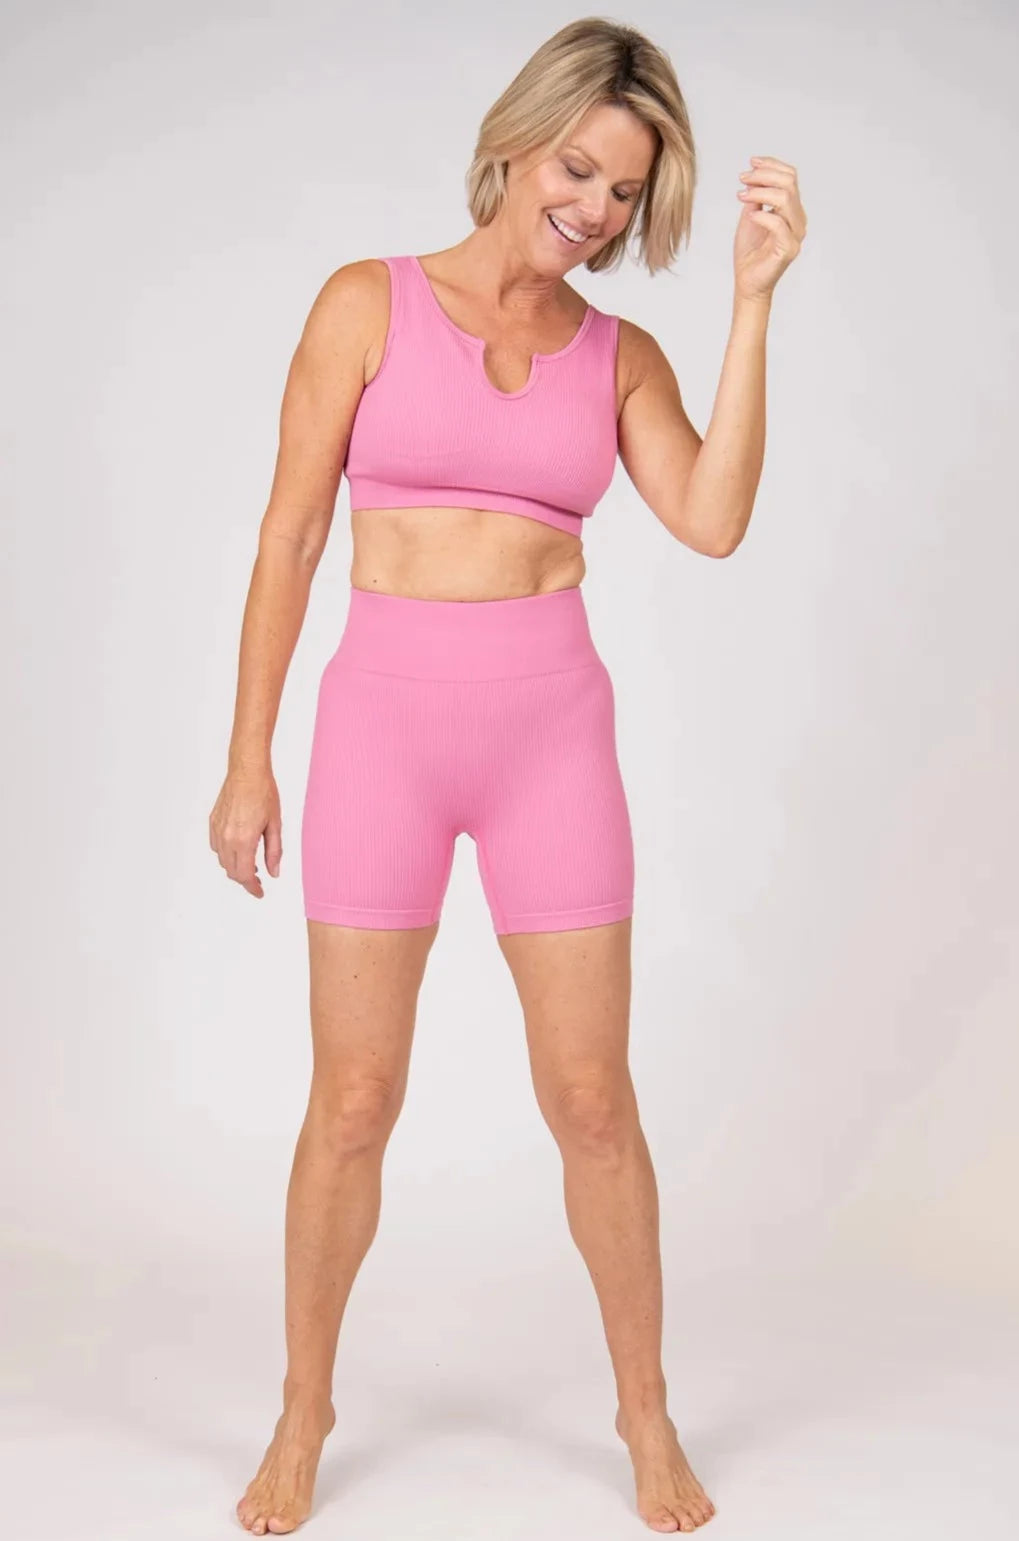 Vibrant Shorts - Pink - FINAL SALE